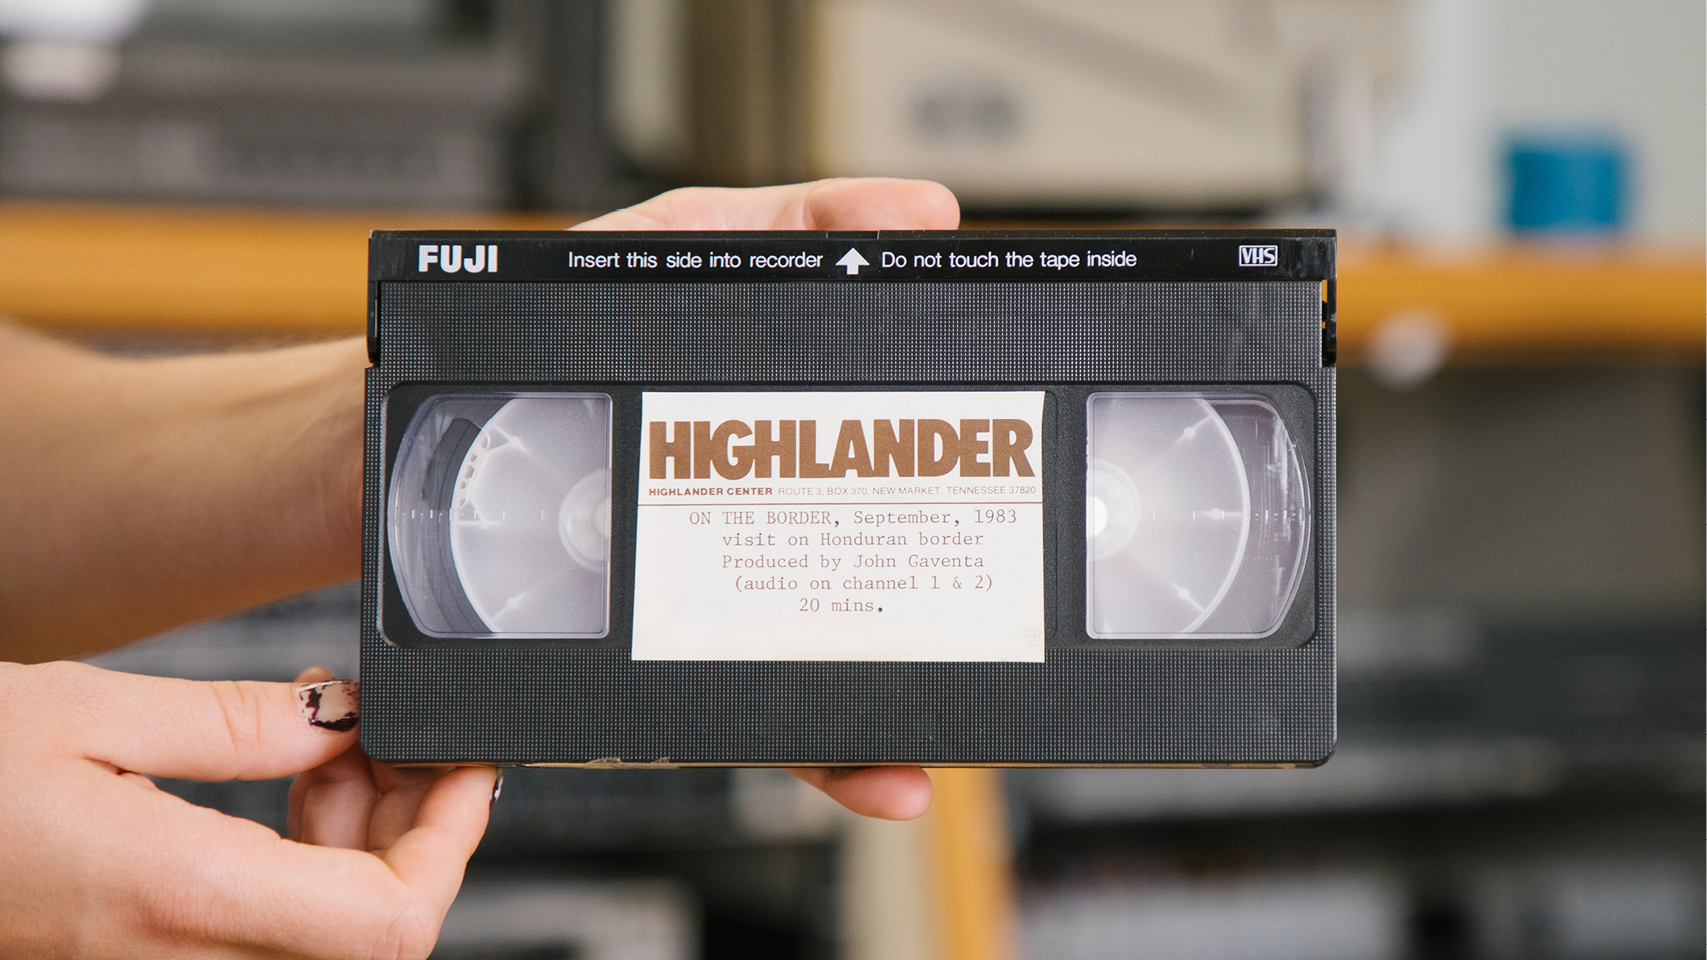 a VHS tape that says "Highlander: on the Border, September 1983 visit on Honduran border; produced by John Gaventa, 20 mins."